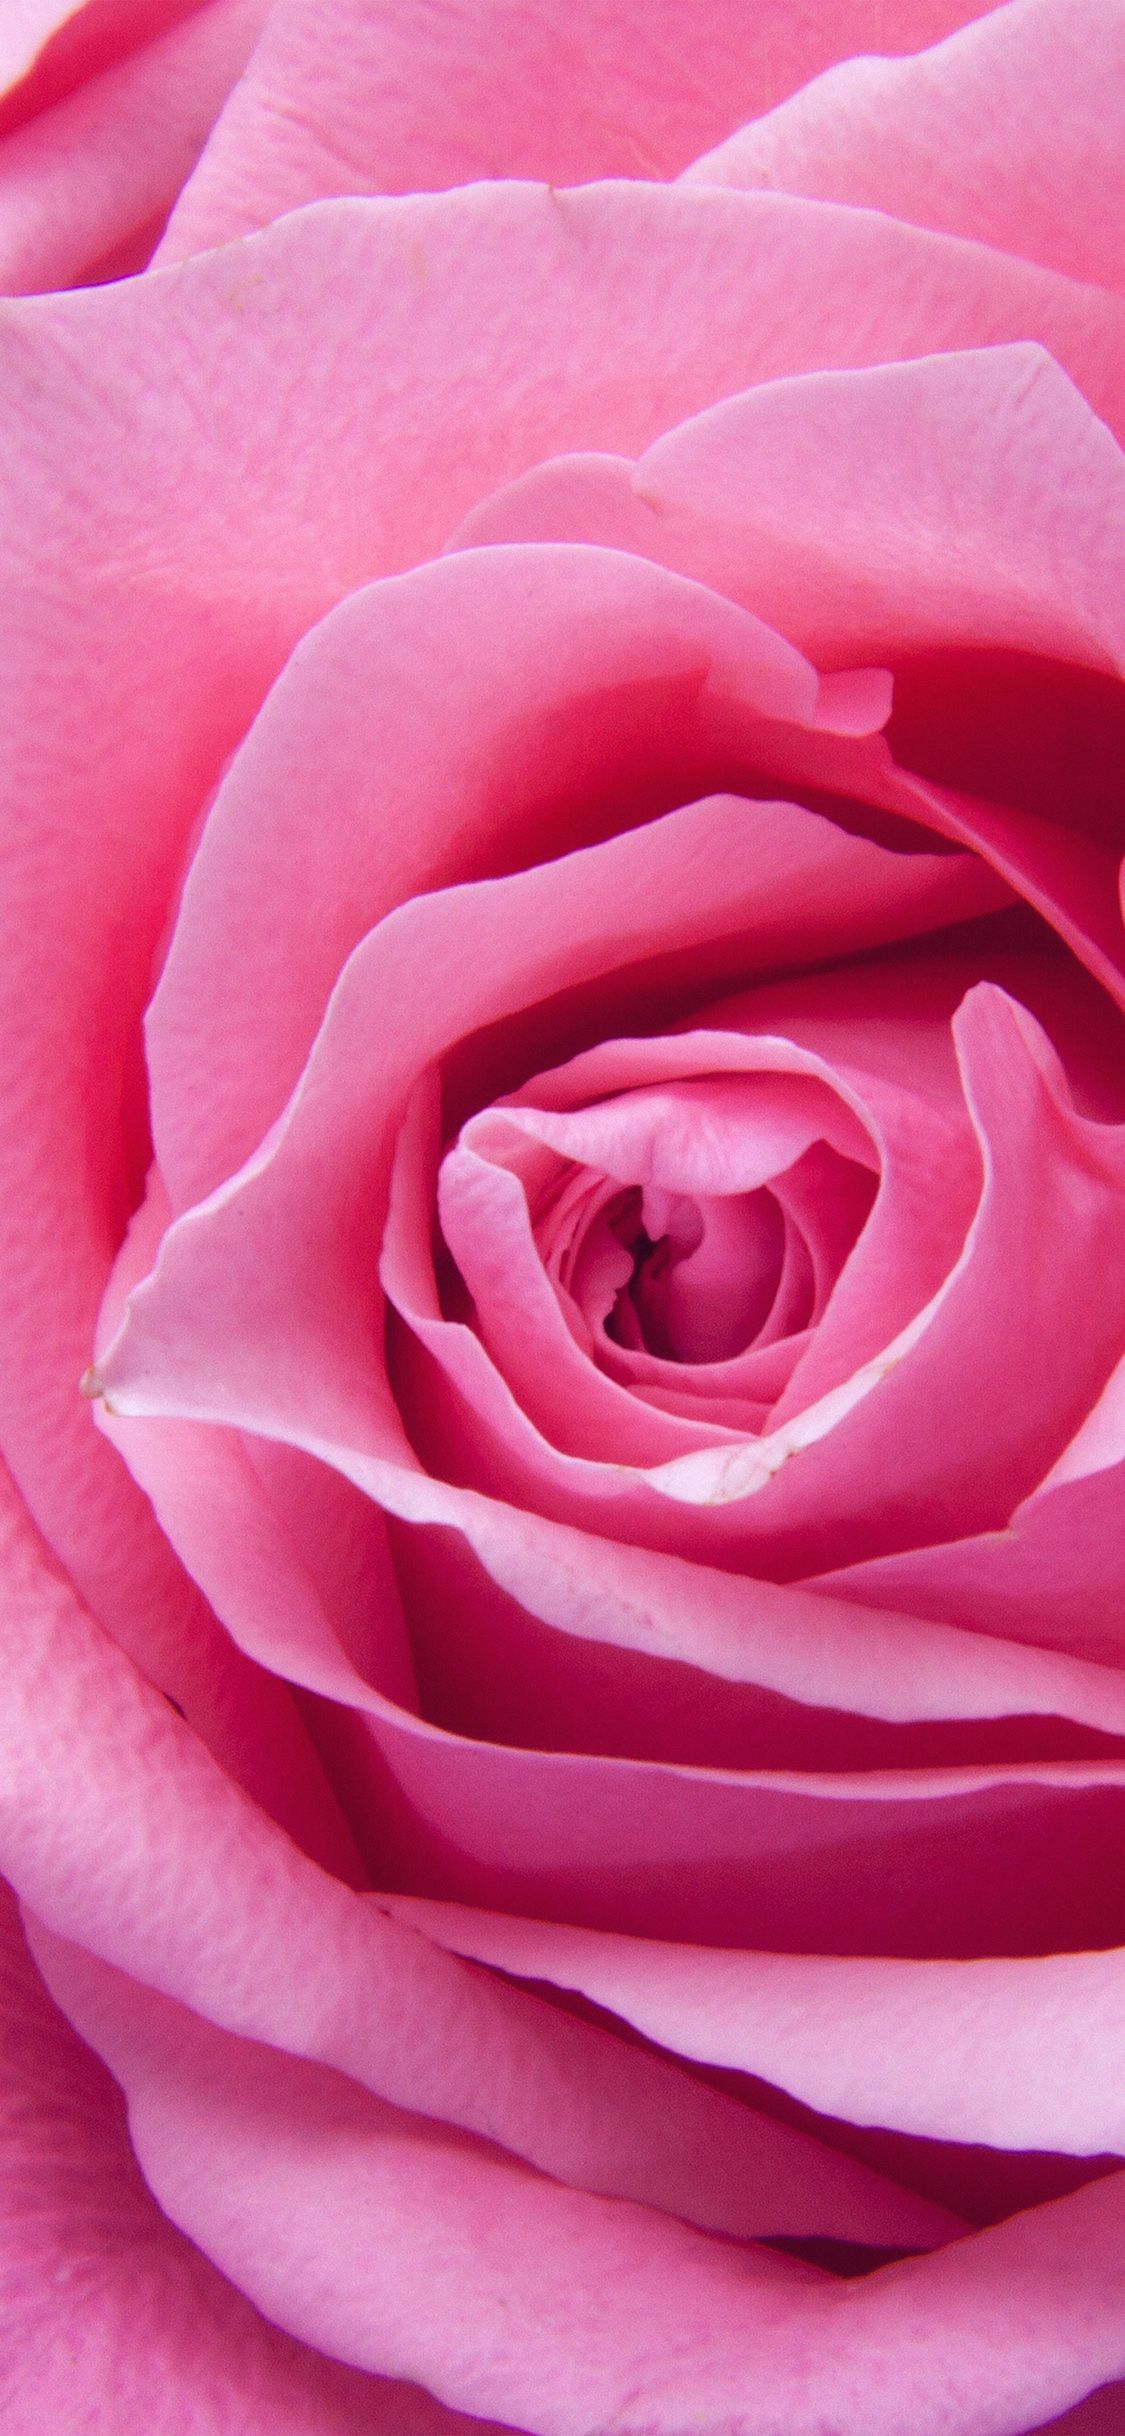 iPhone X wallpaper. flower pink rose